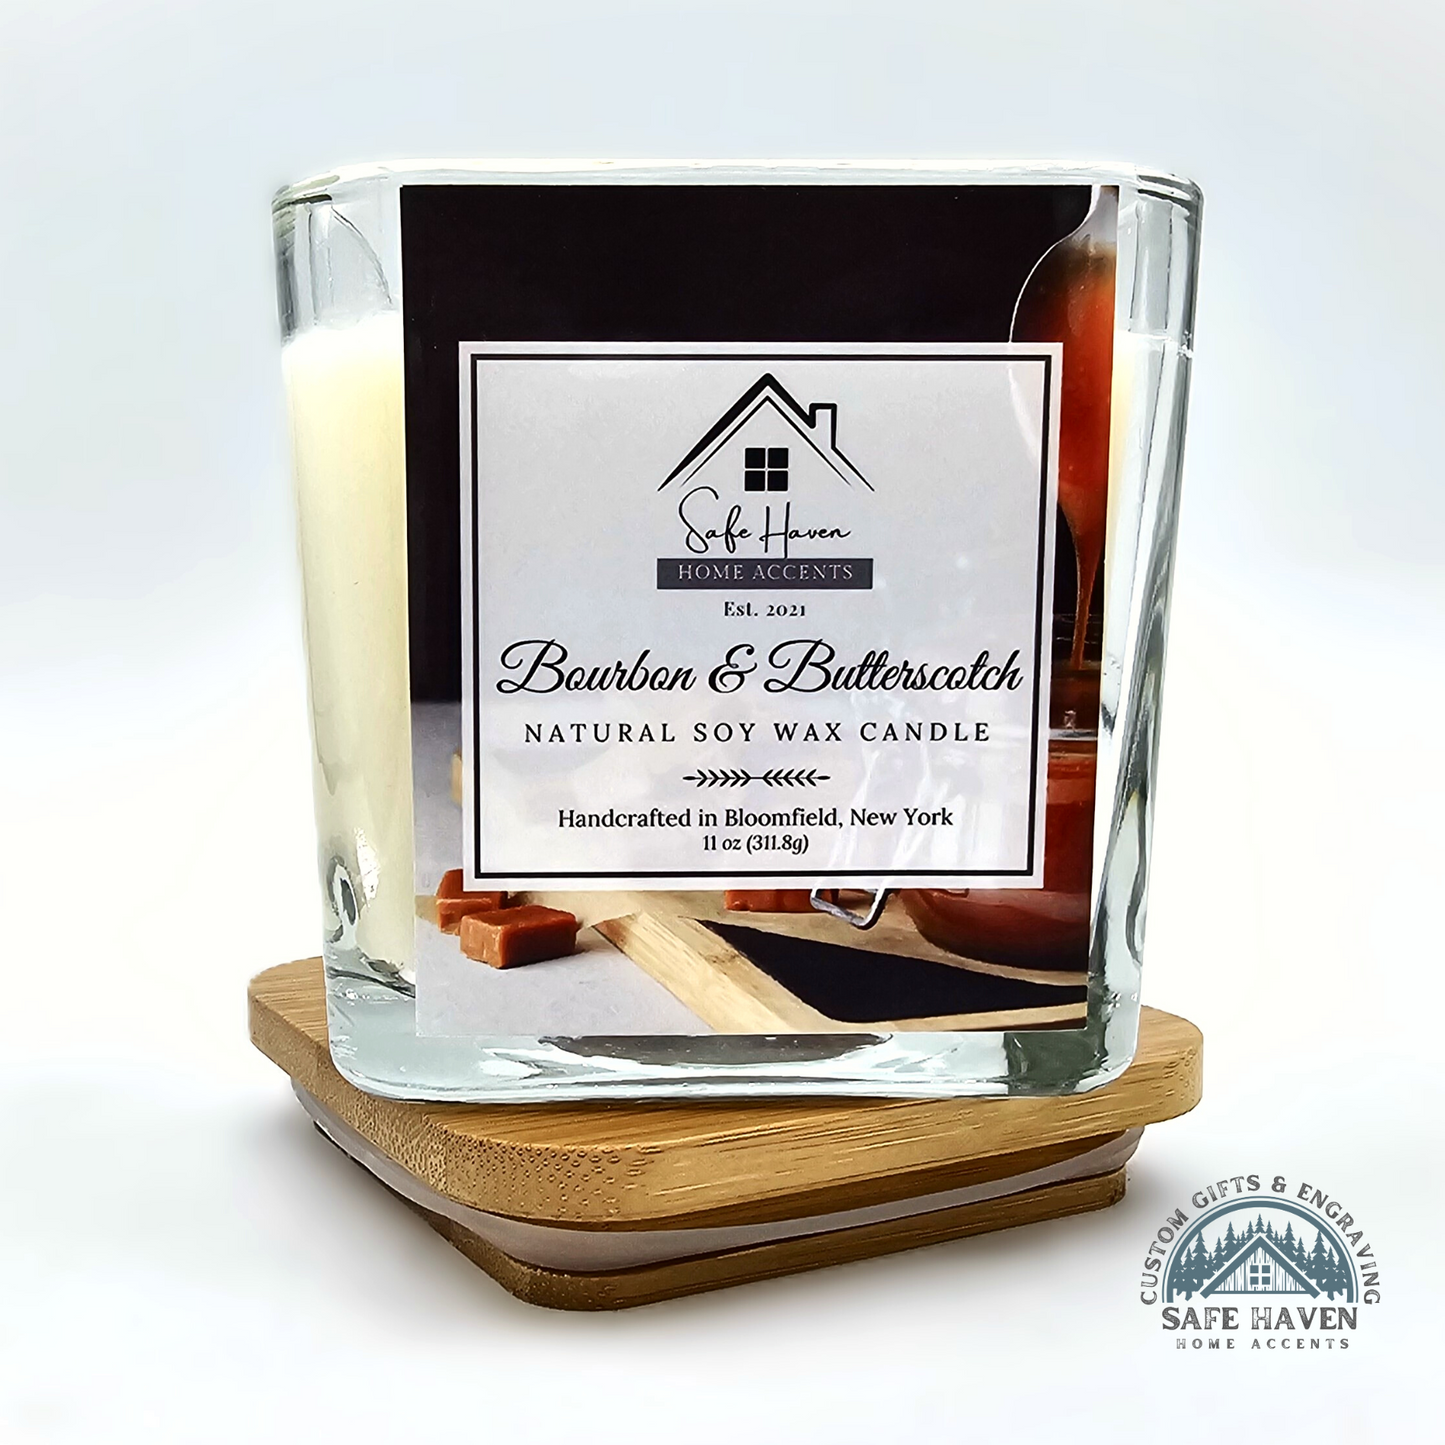 Bourbon & Butterscotch Natural Soy Wax Candle